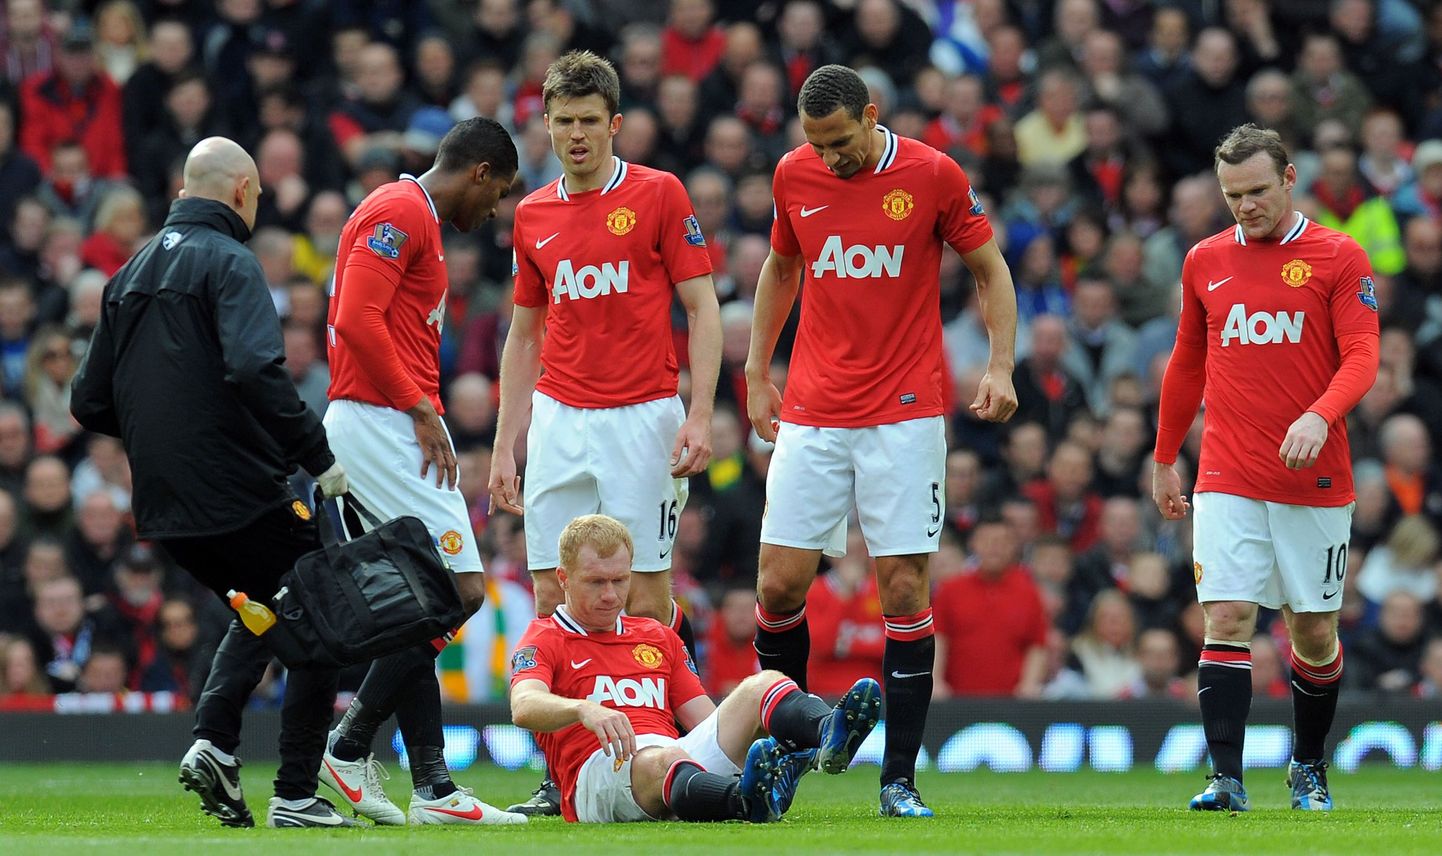 Manchester Unitedi mängija Paul Scholes vigastatuna murul istumas.